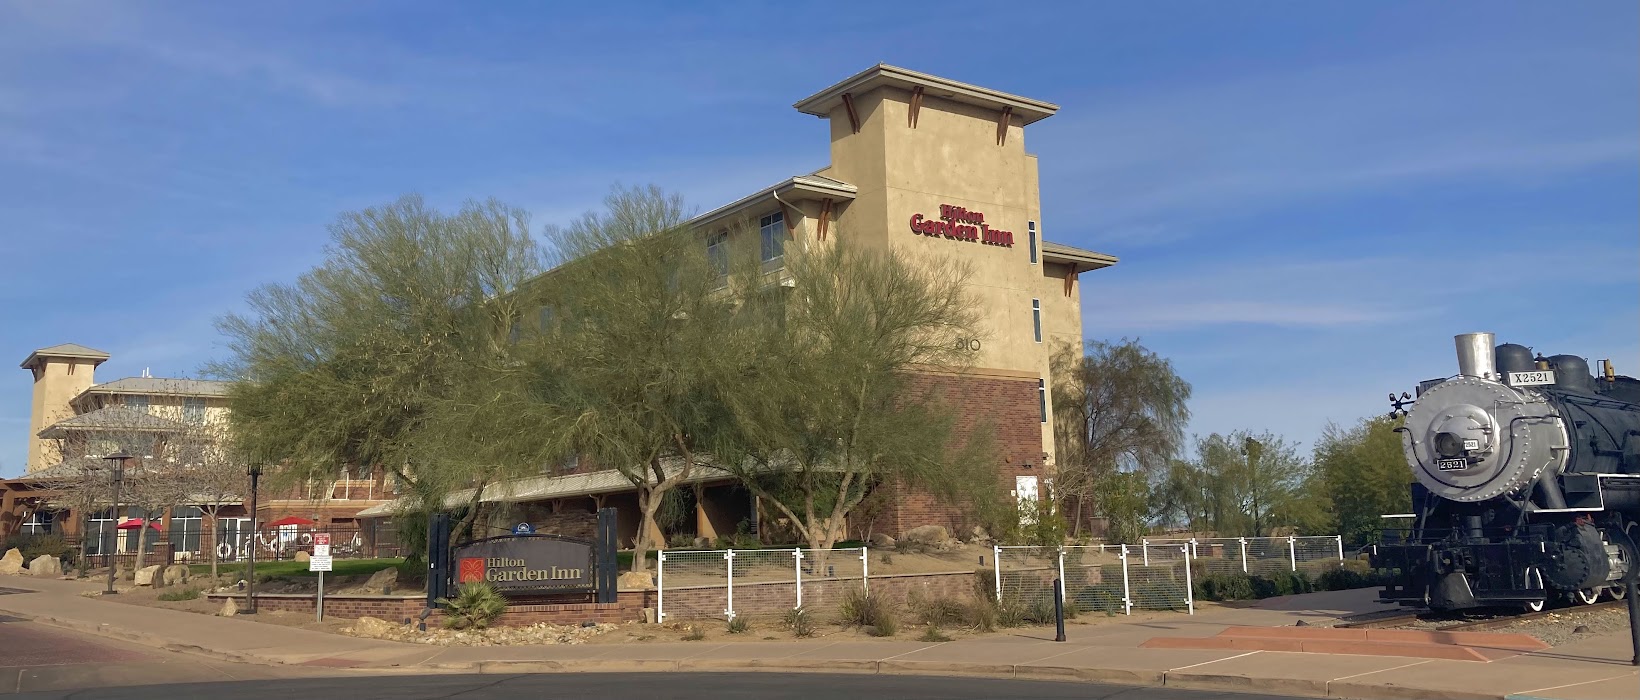 The Hilton Garden Inn
Yuma, AZ